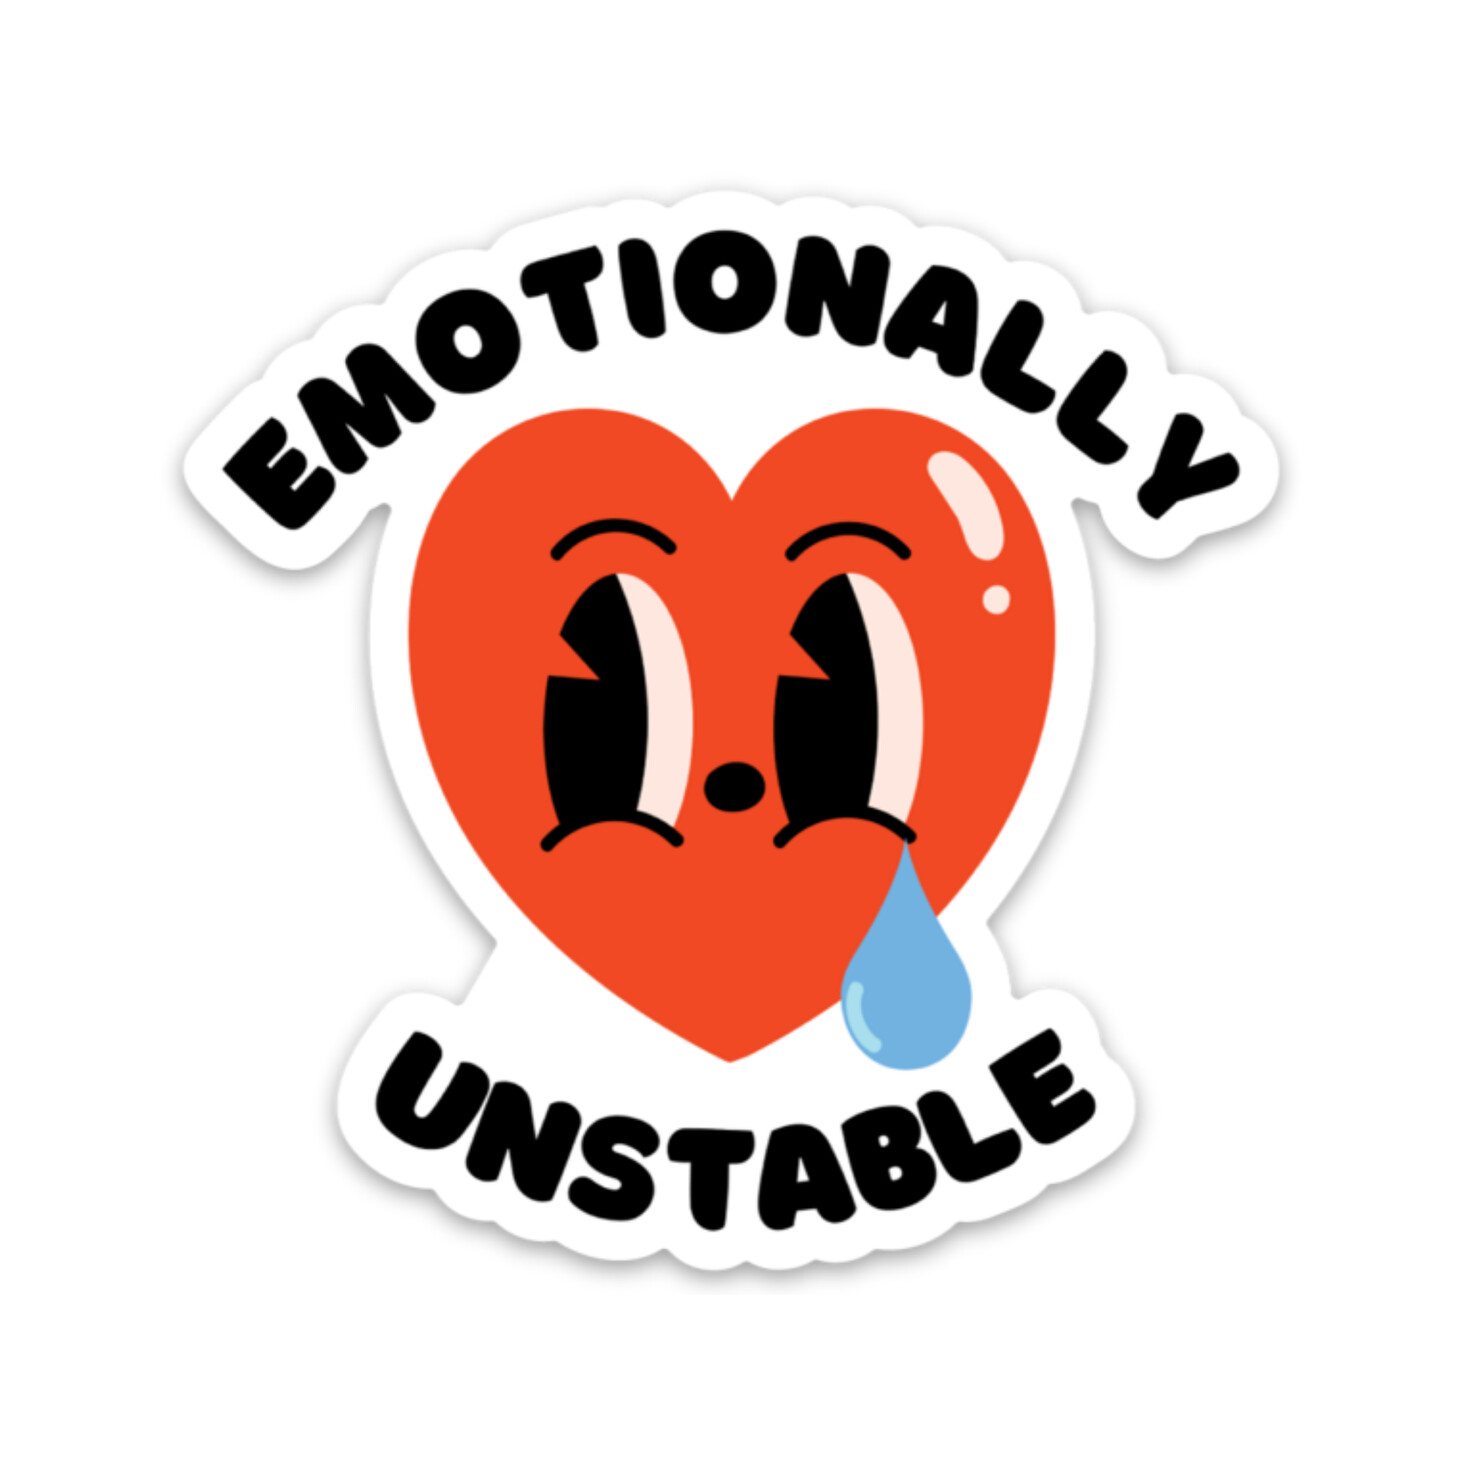 Emotionally Unstable Sticker